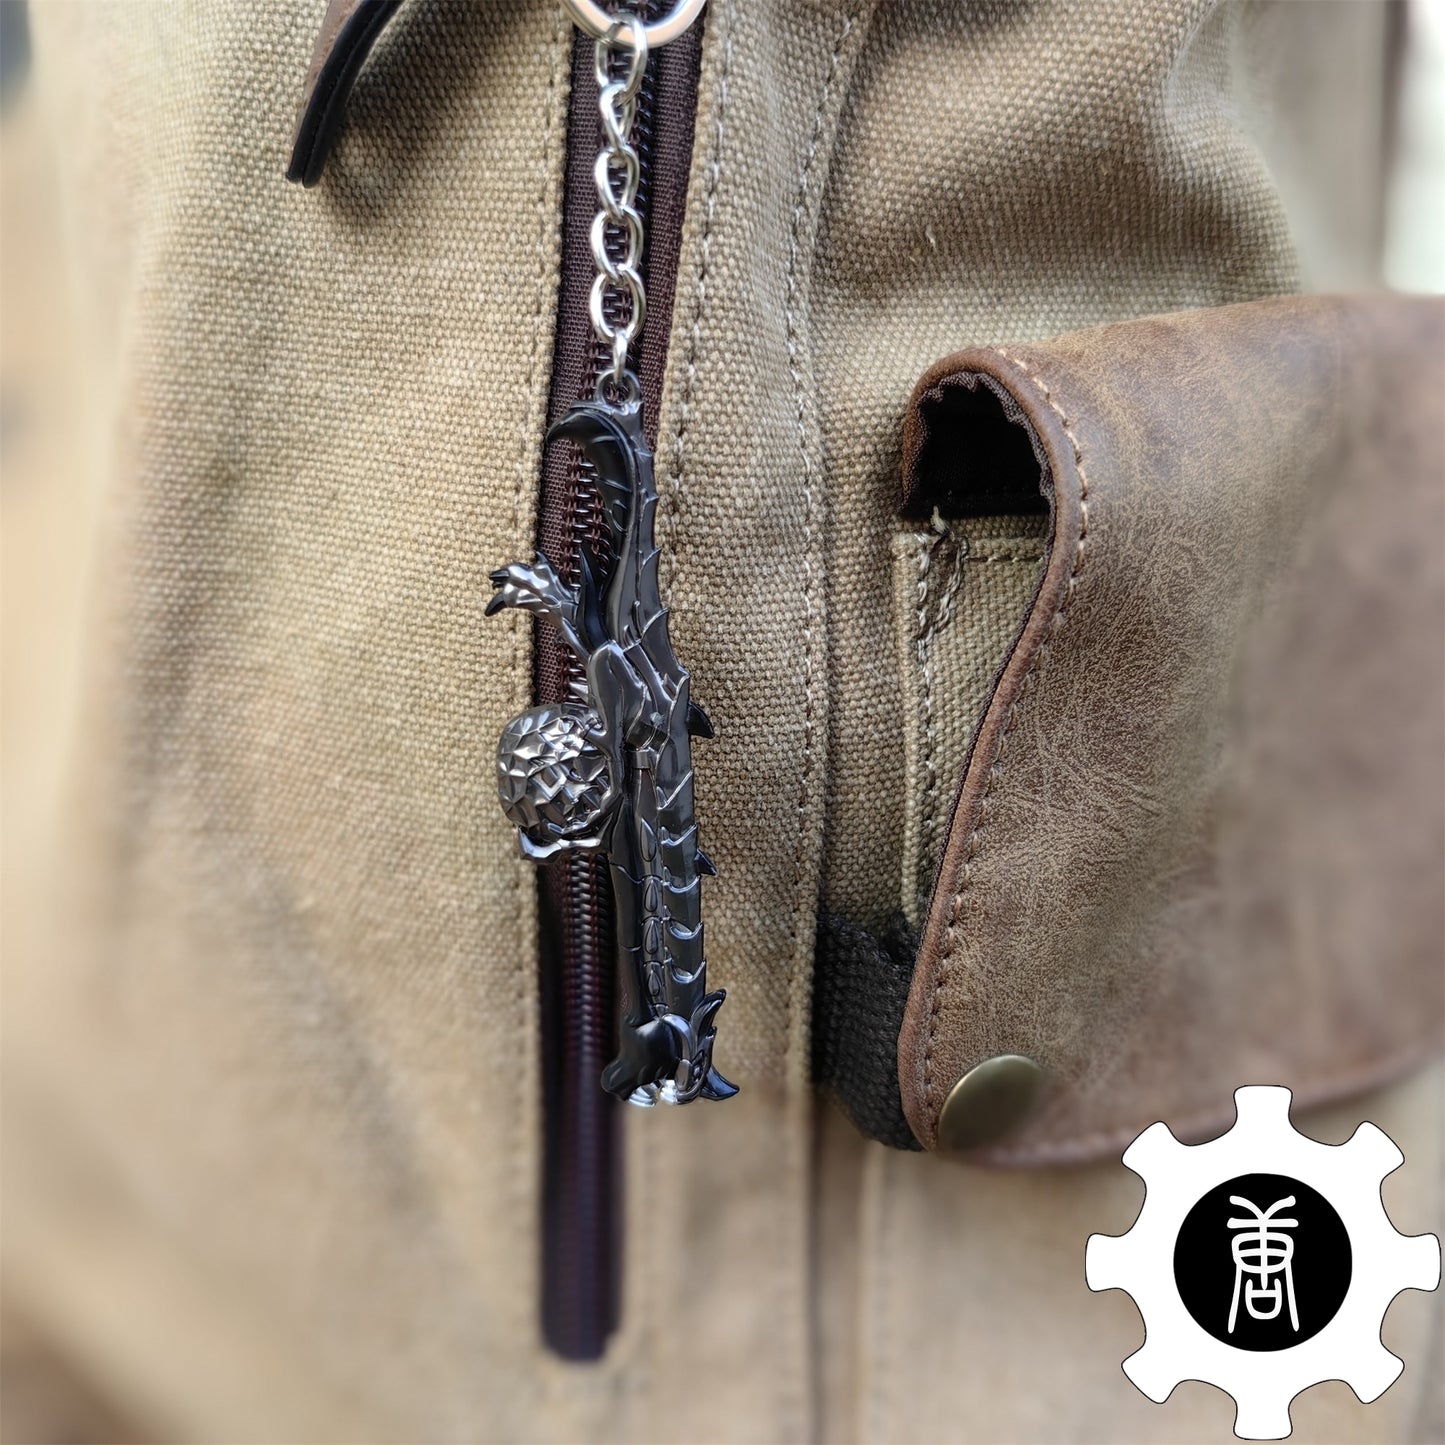 Elderflame Judge Skin Gun Keychain Backpack Decor Cool Gift 3 In 1 Pack